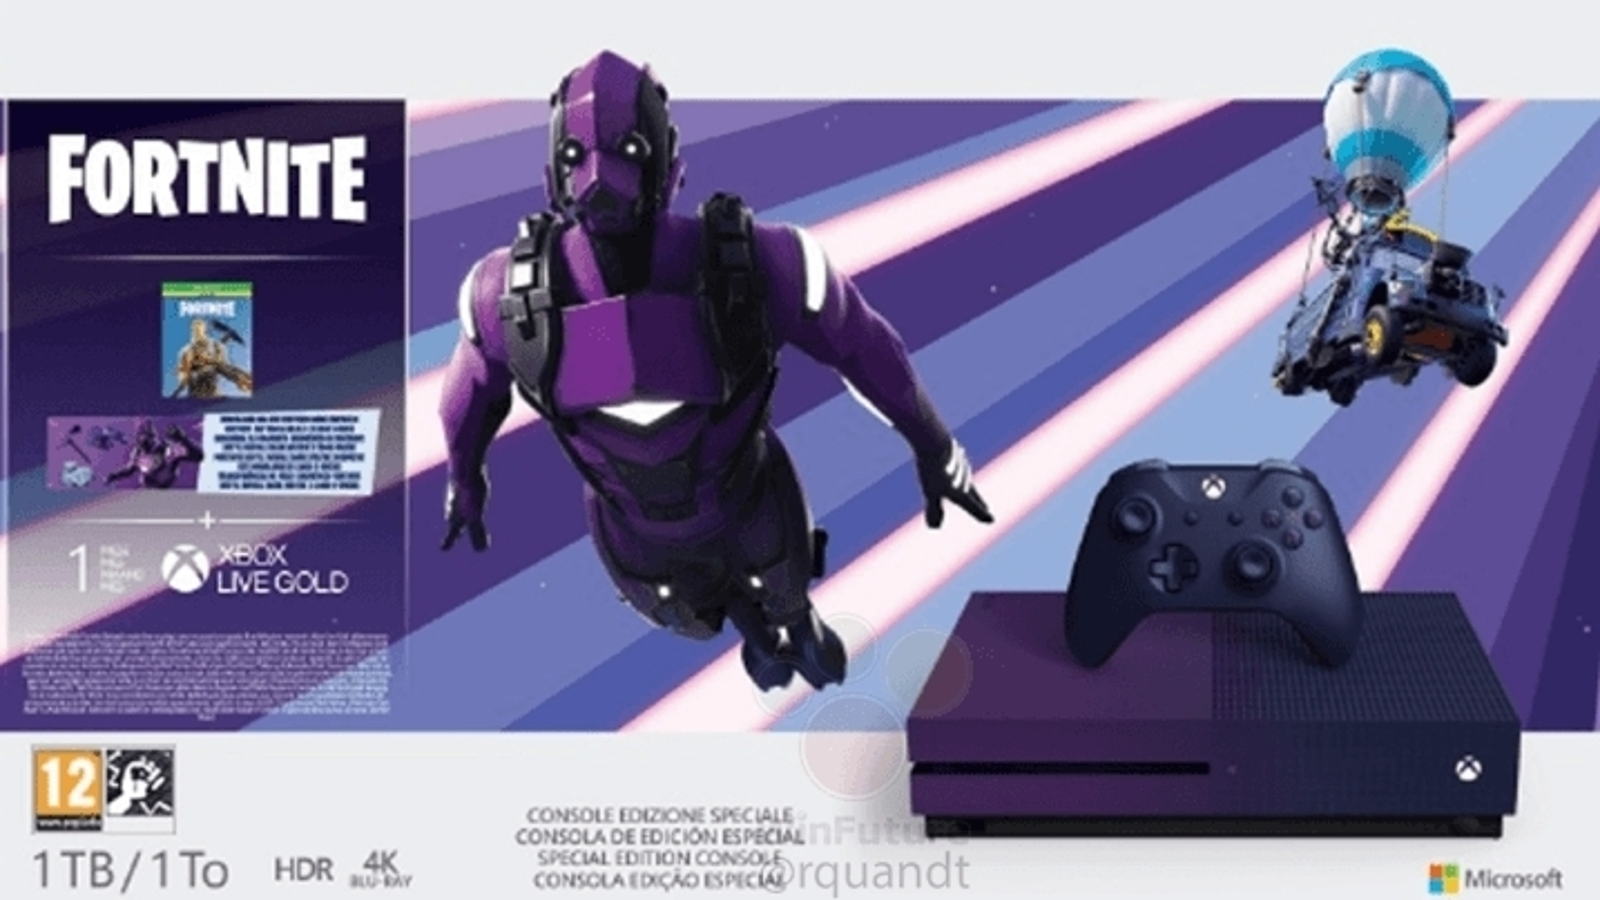 Microsoft will soon release a purple Fortnite Xbox One S, new leak reveals